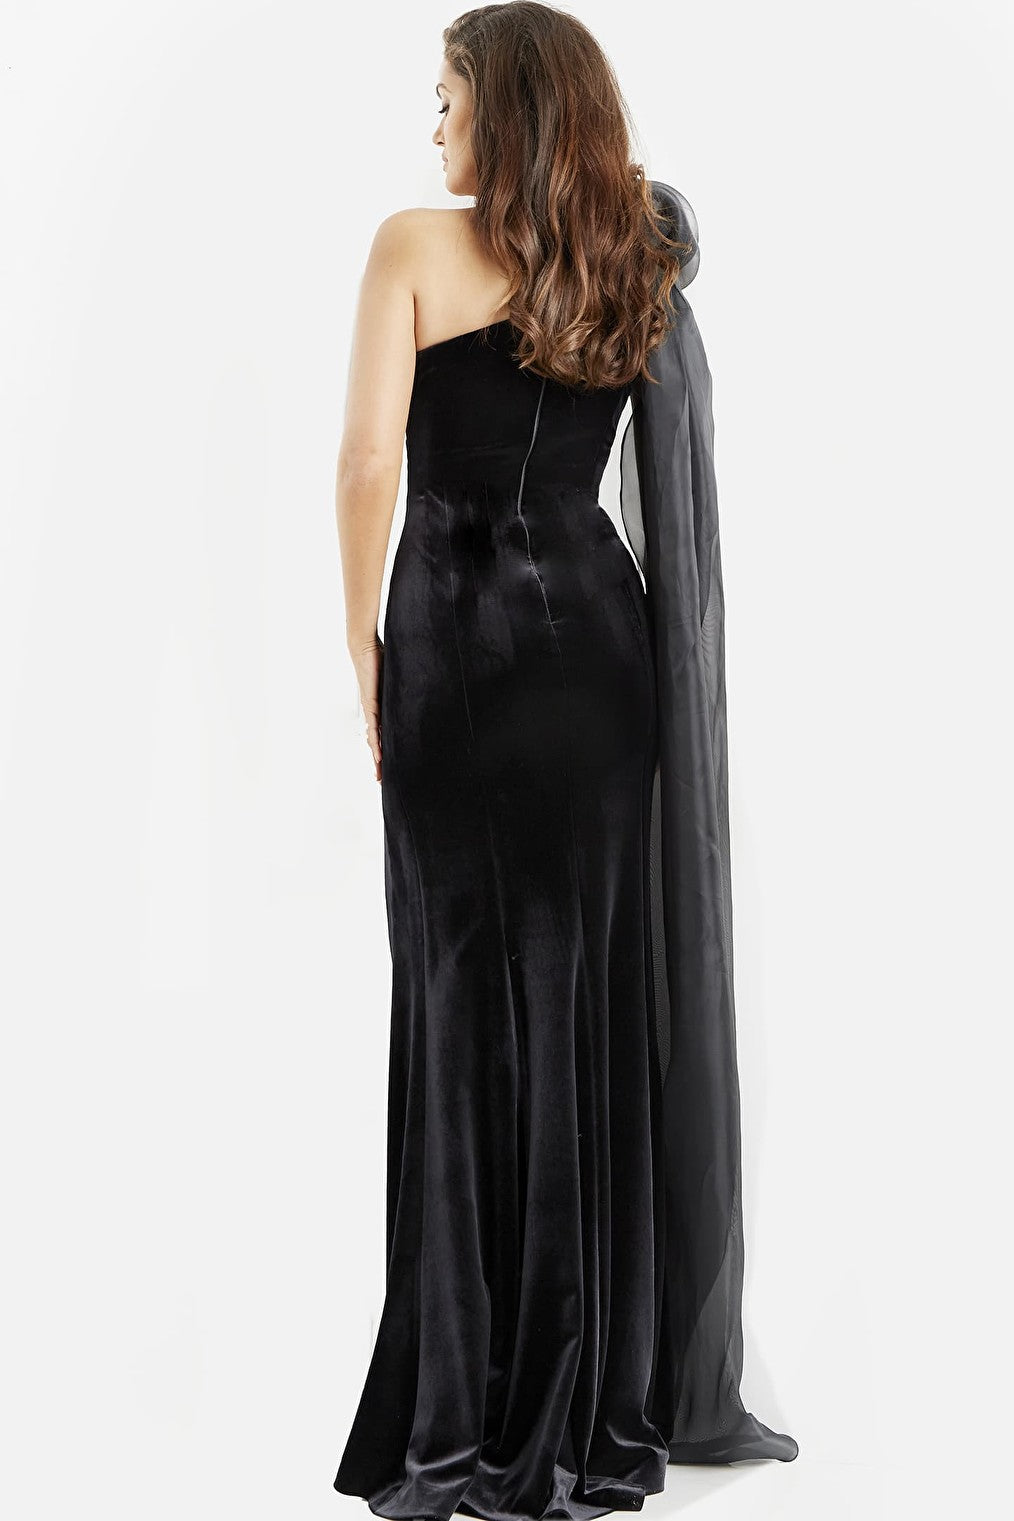 One shoulder black evening gown 08116